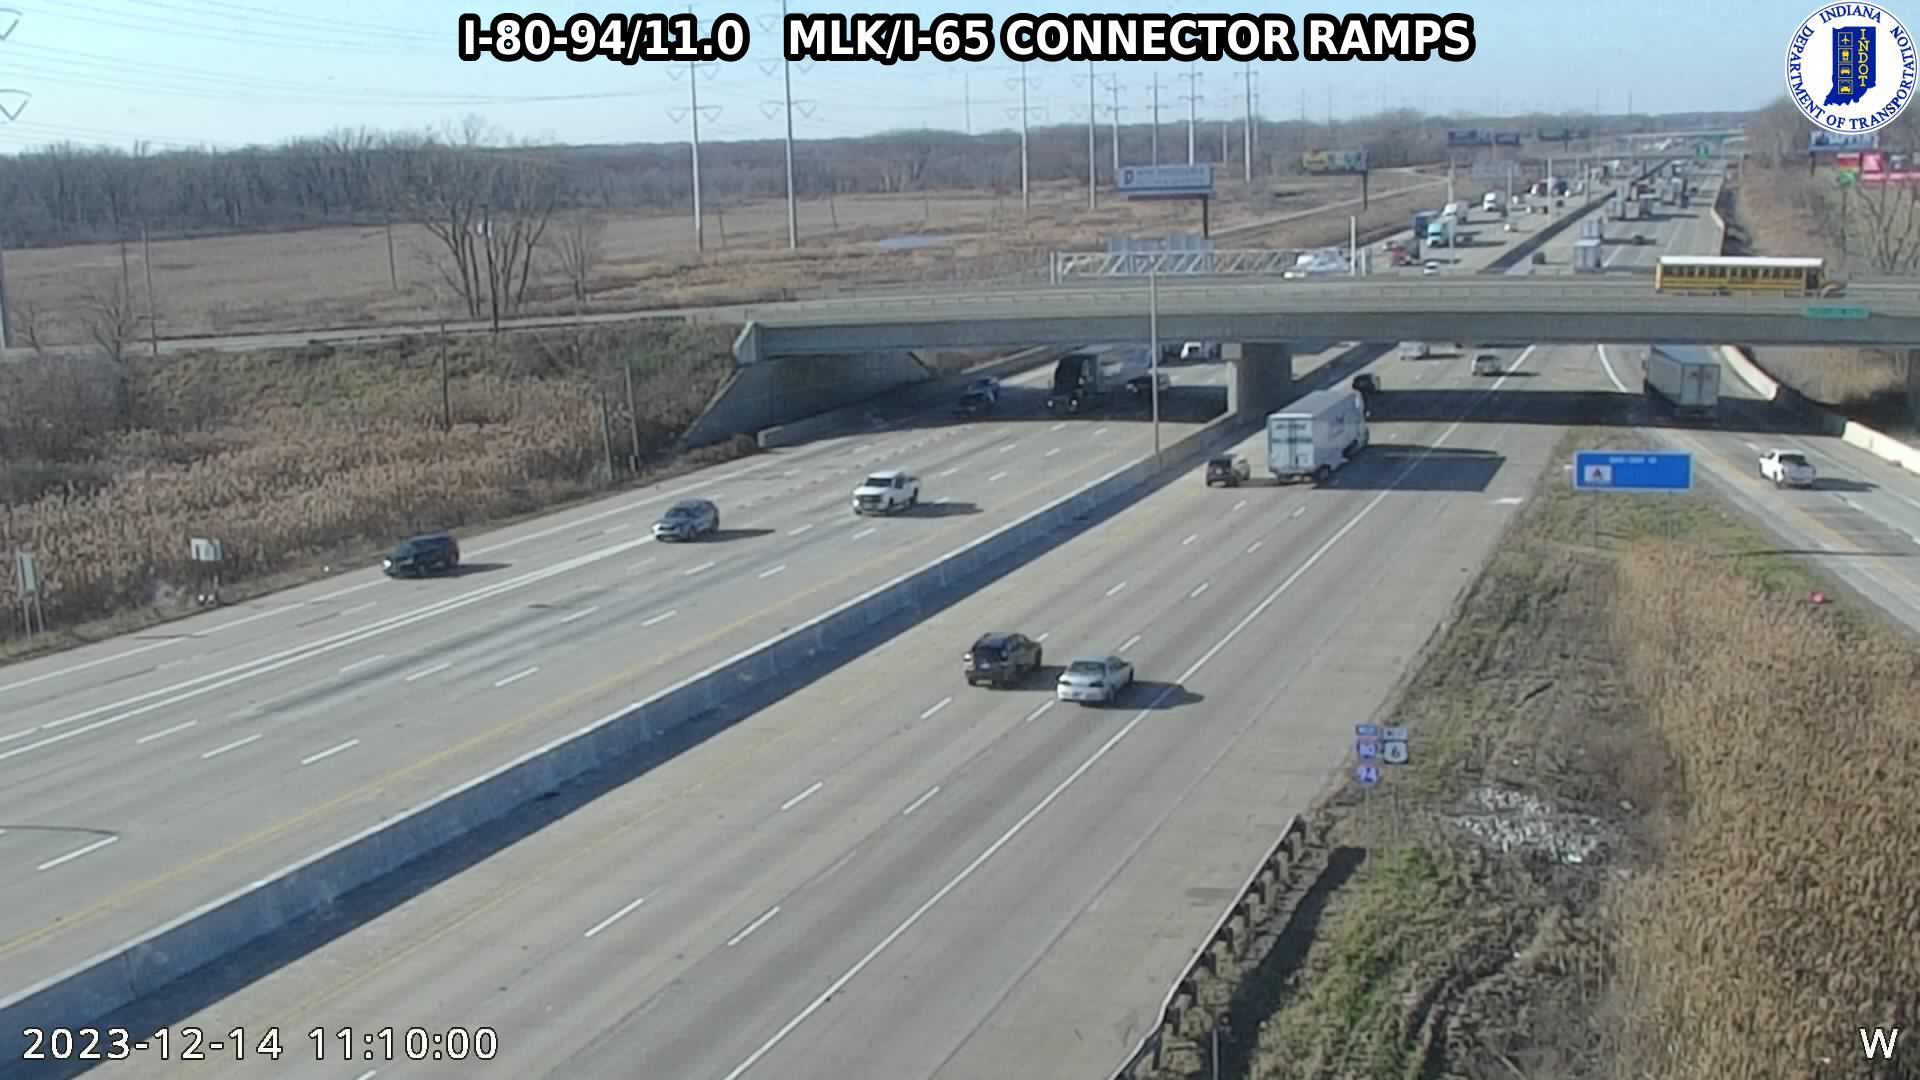 Gary: I-94: I-80-94/11.0 MLK/I-65 CONNECTOR RAMPS Traffic Camera